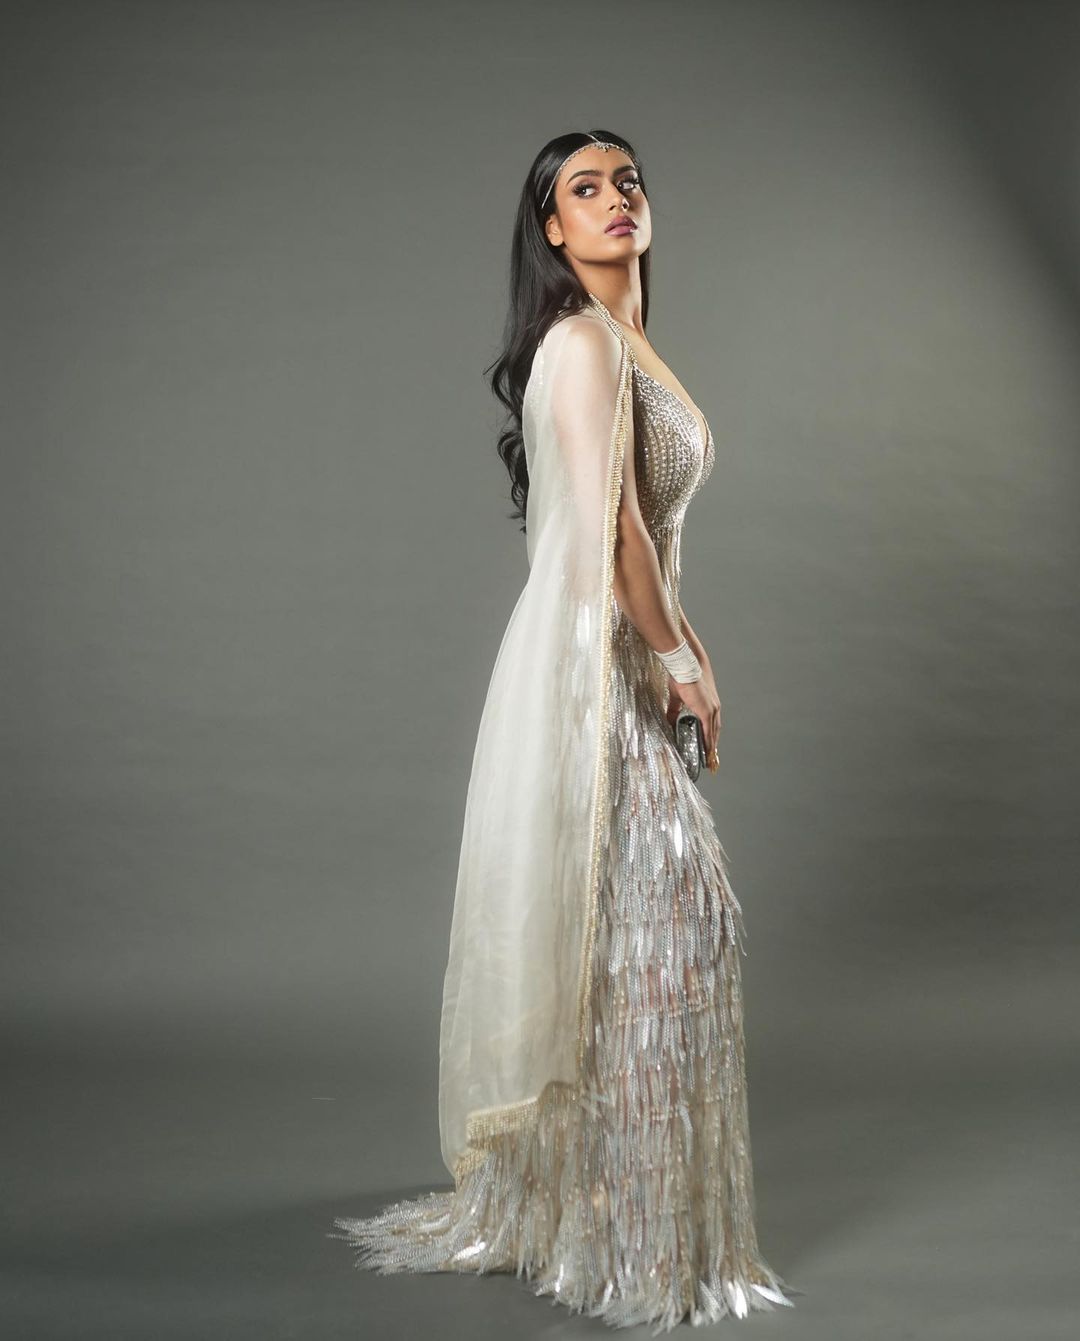 Kajol-Nysa Devgn : glamours looks in ivory Abu Jani and Sandeep Khosla outfits 